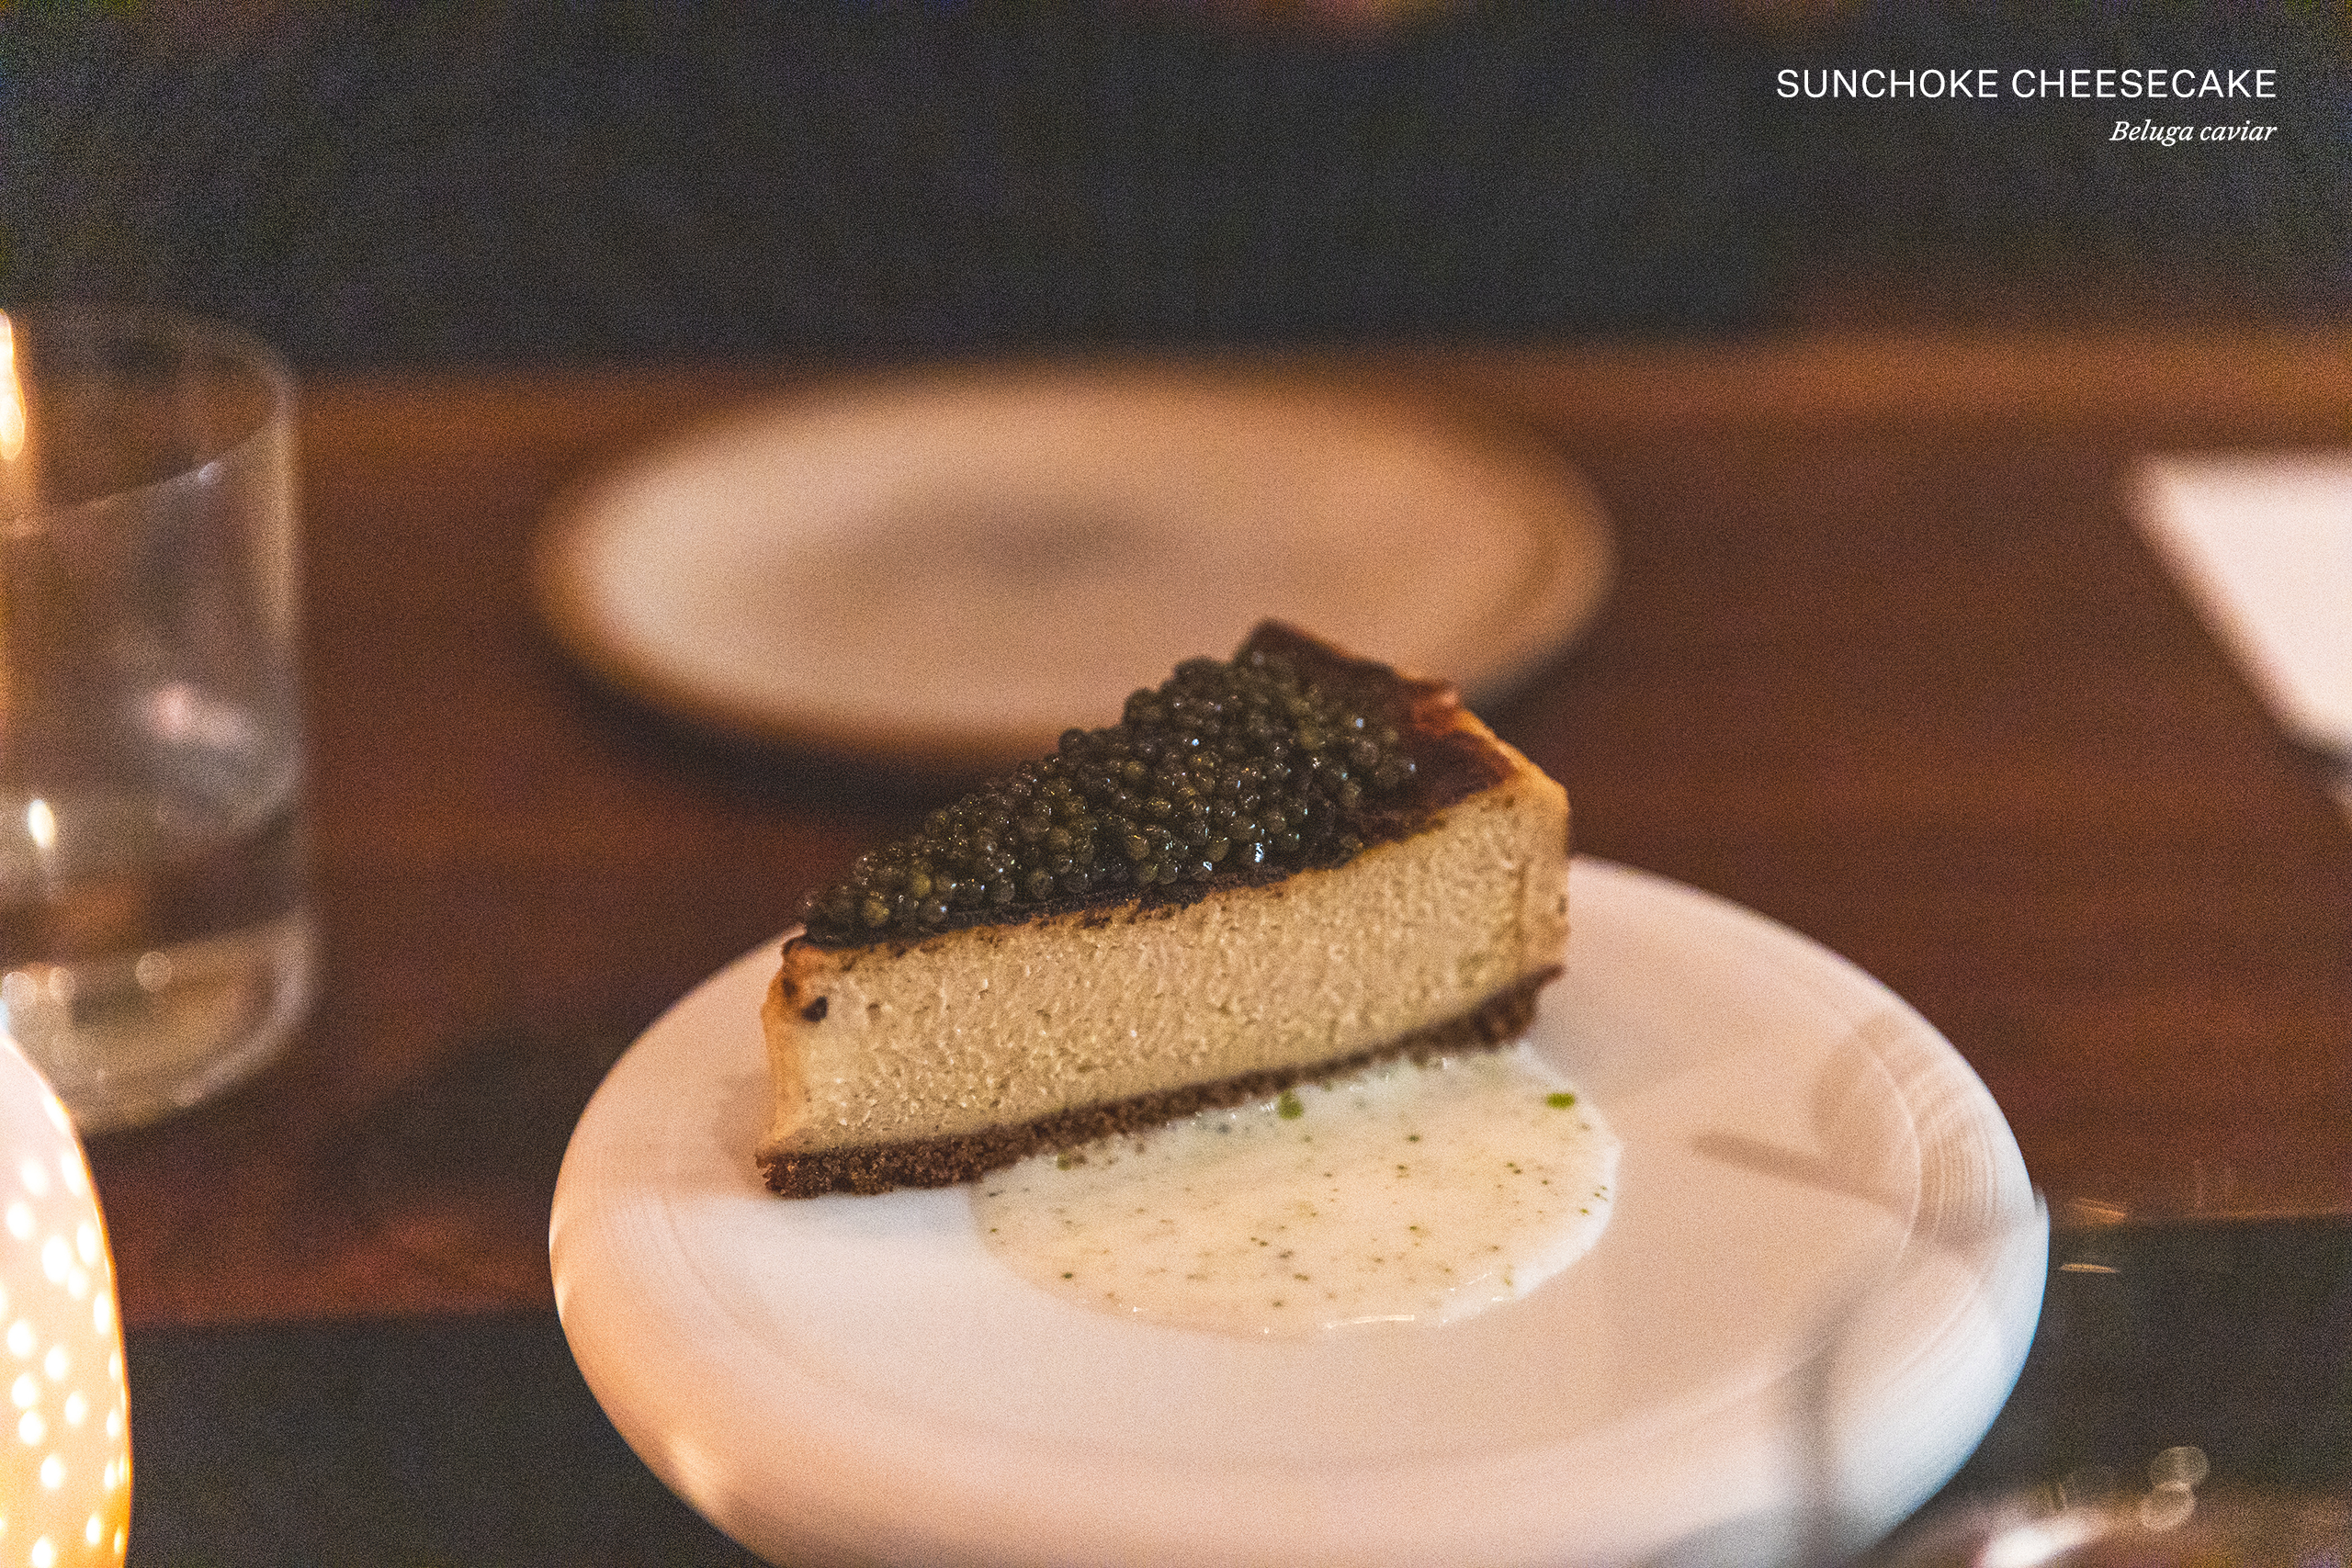 Sunchoke cheesecake with beluga caviar